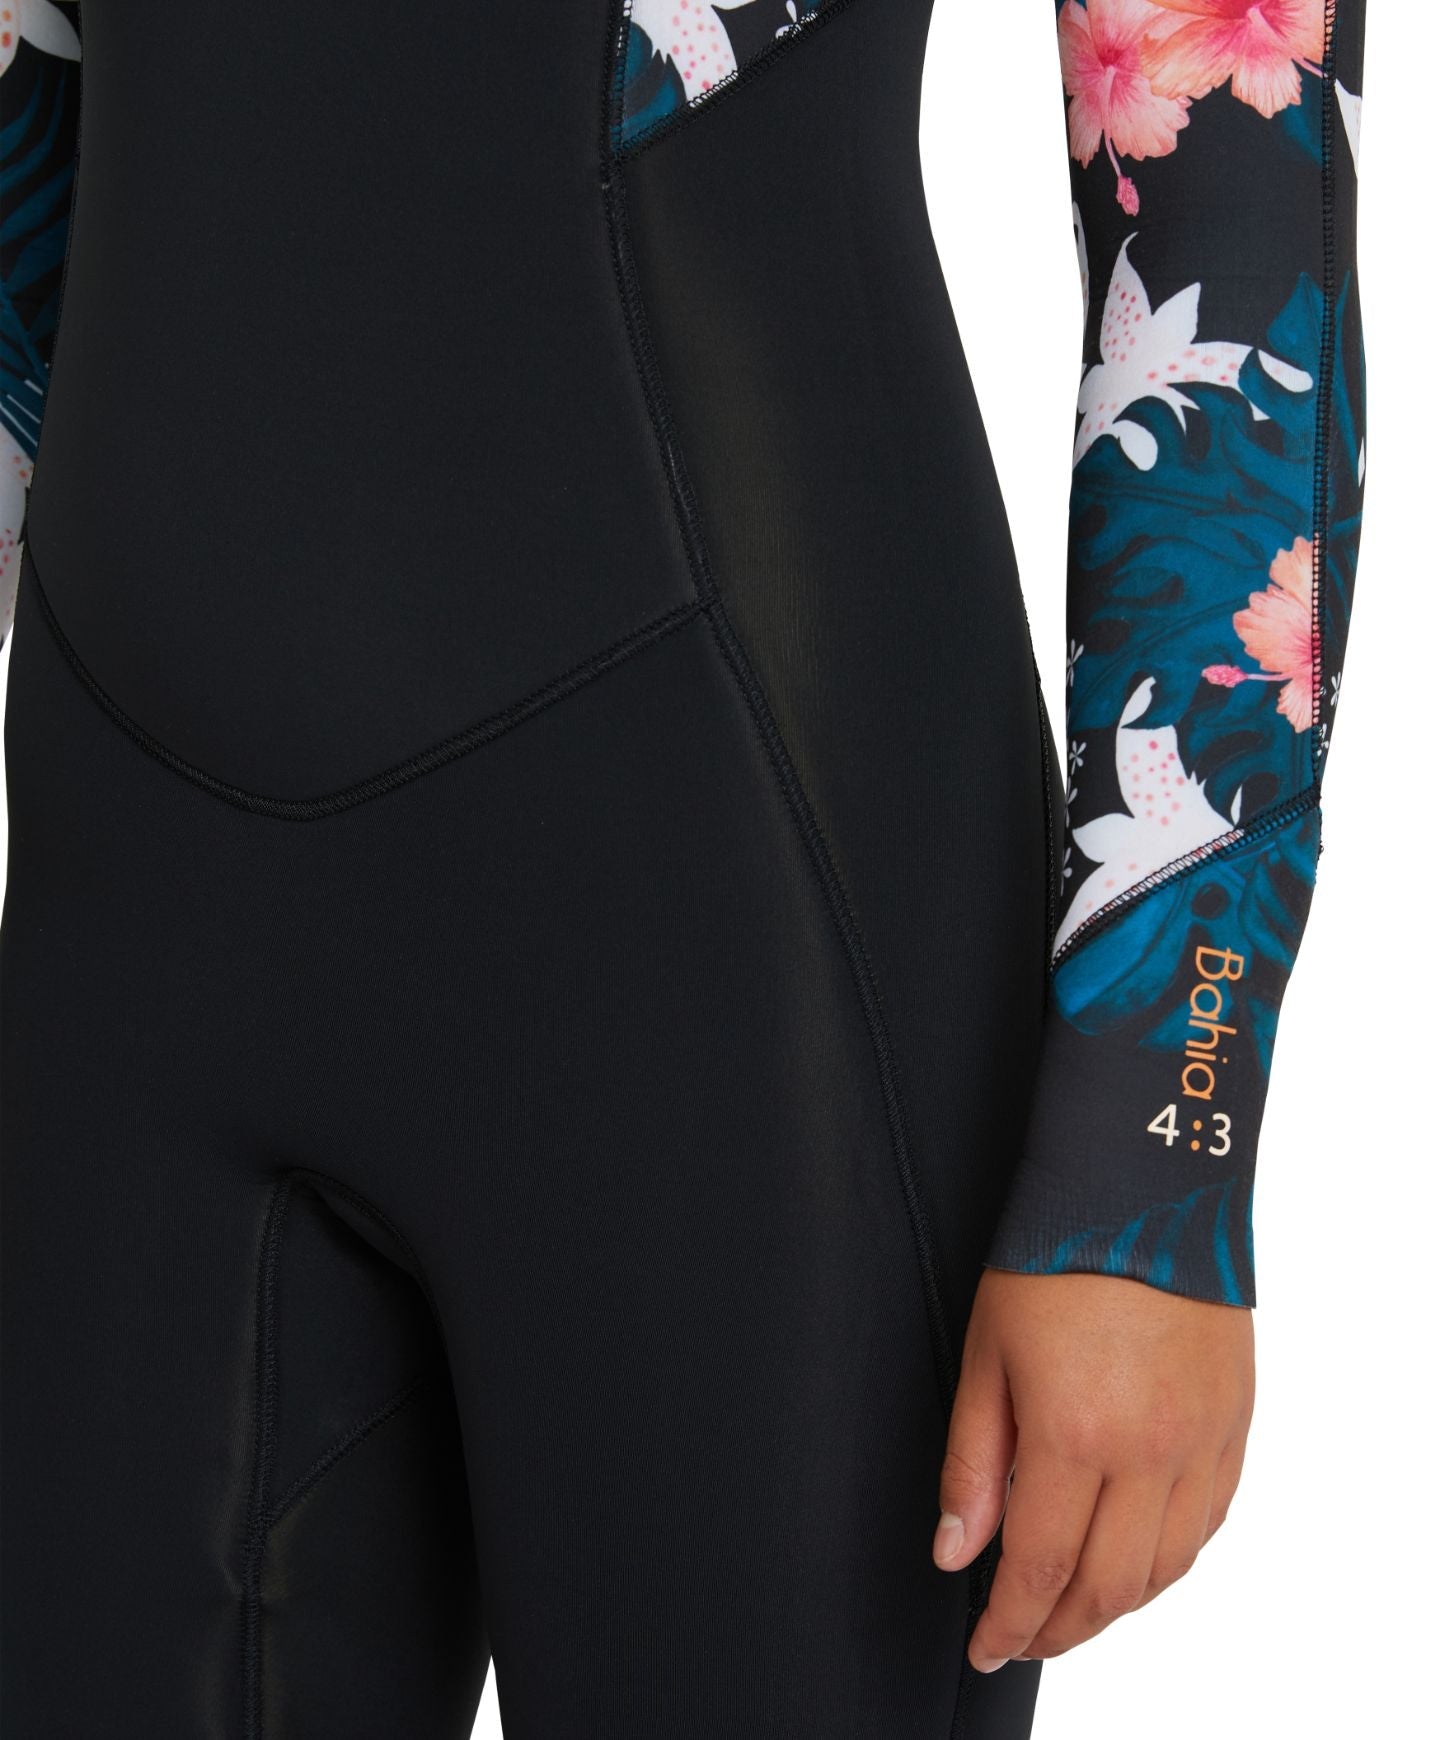 Women's Bahia 4/3mm Steamer Chest Zip Wetsuit - Black Hibiscus